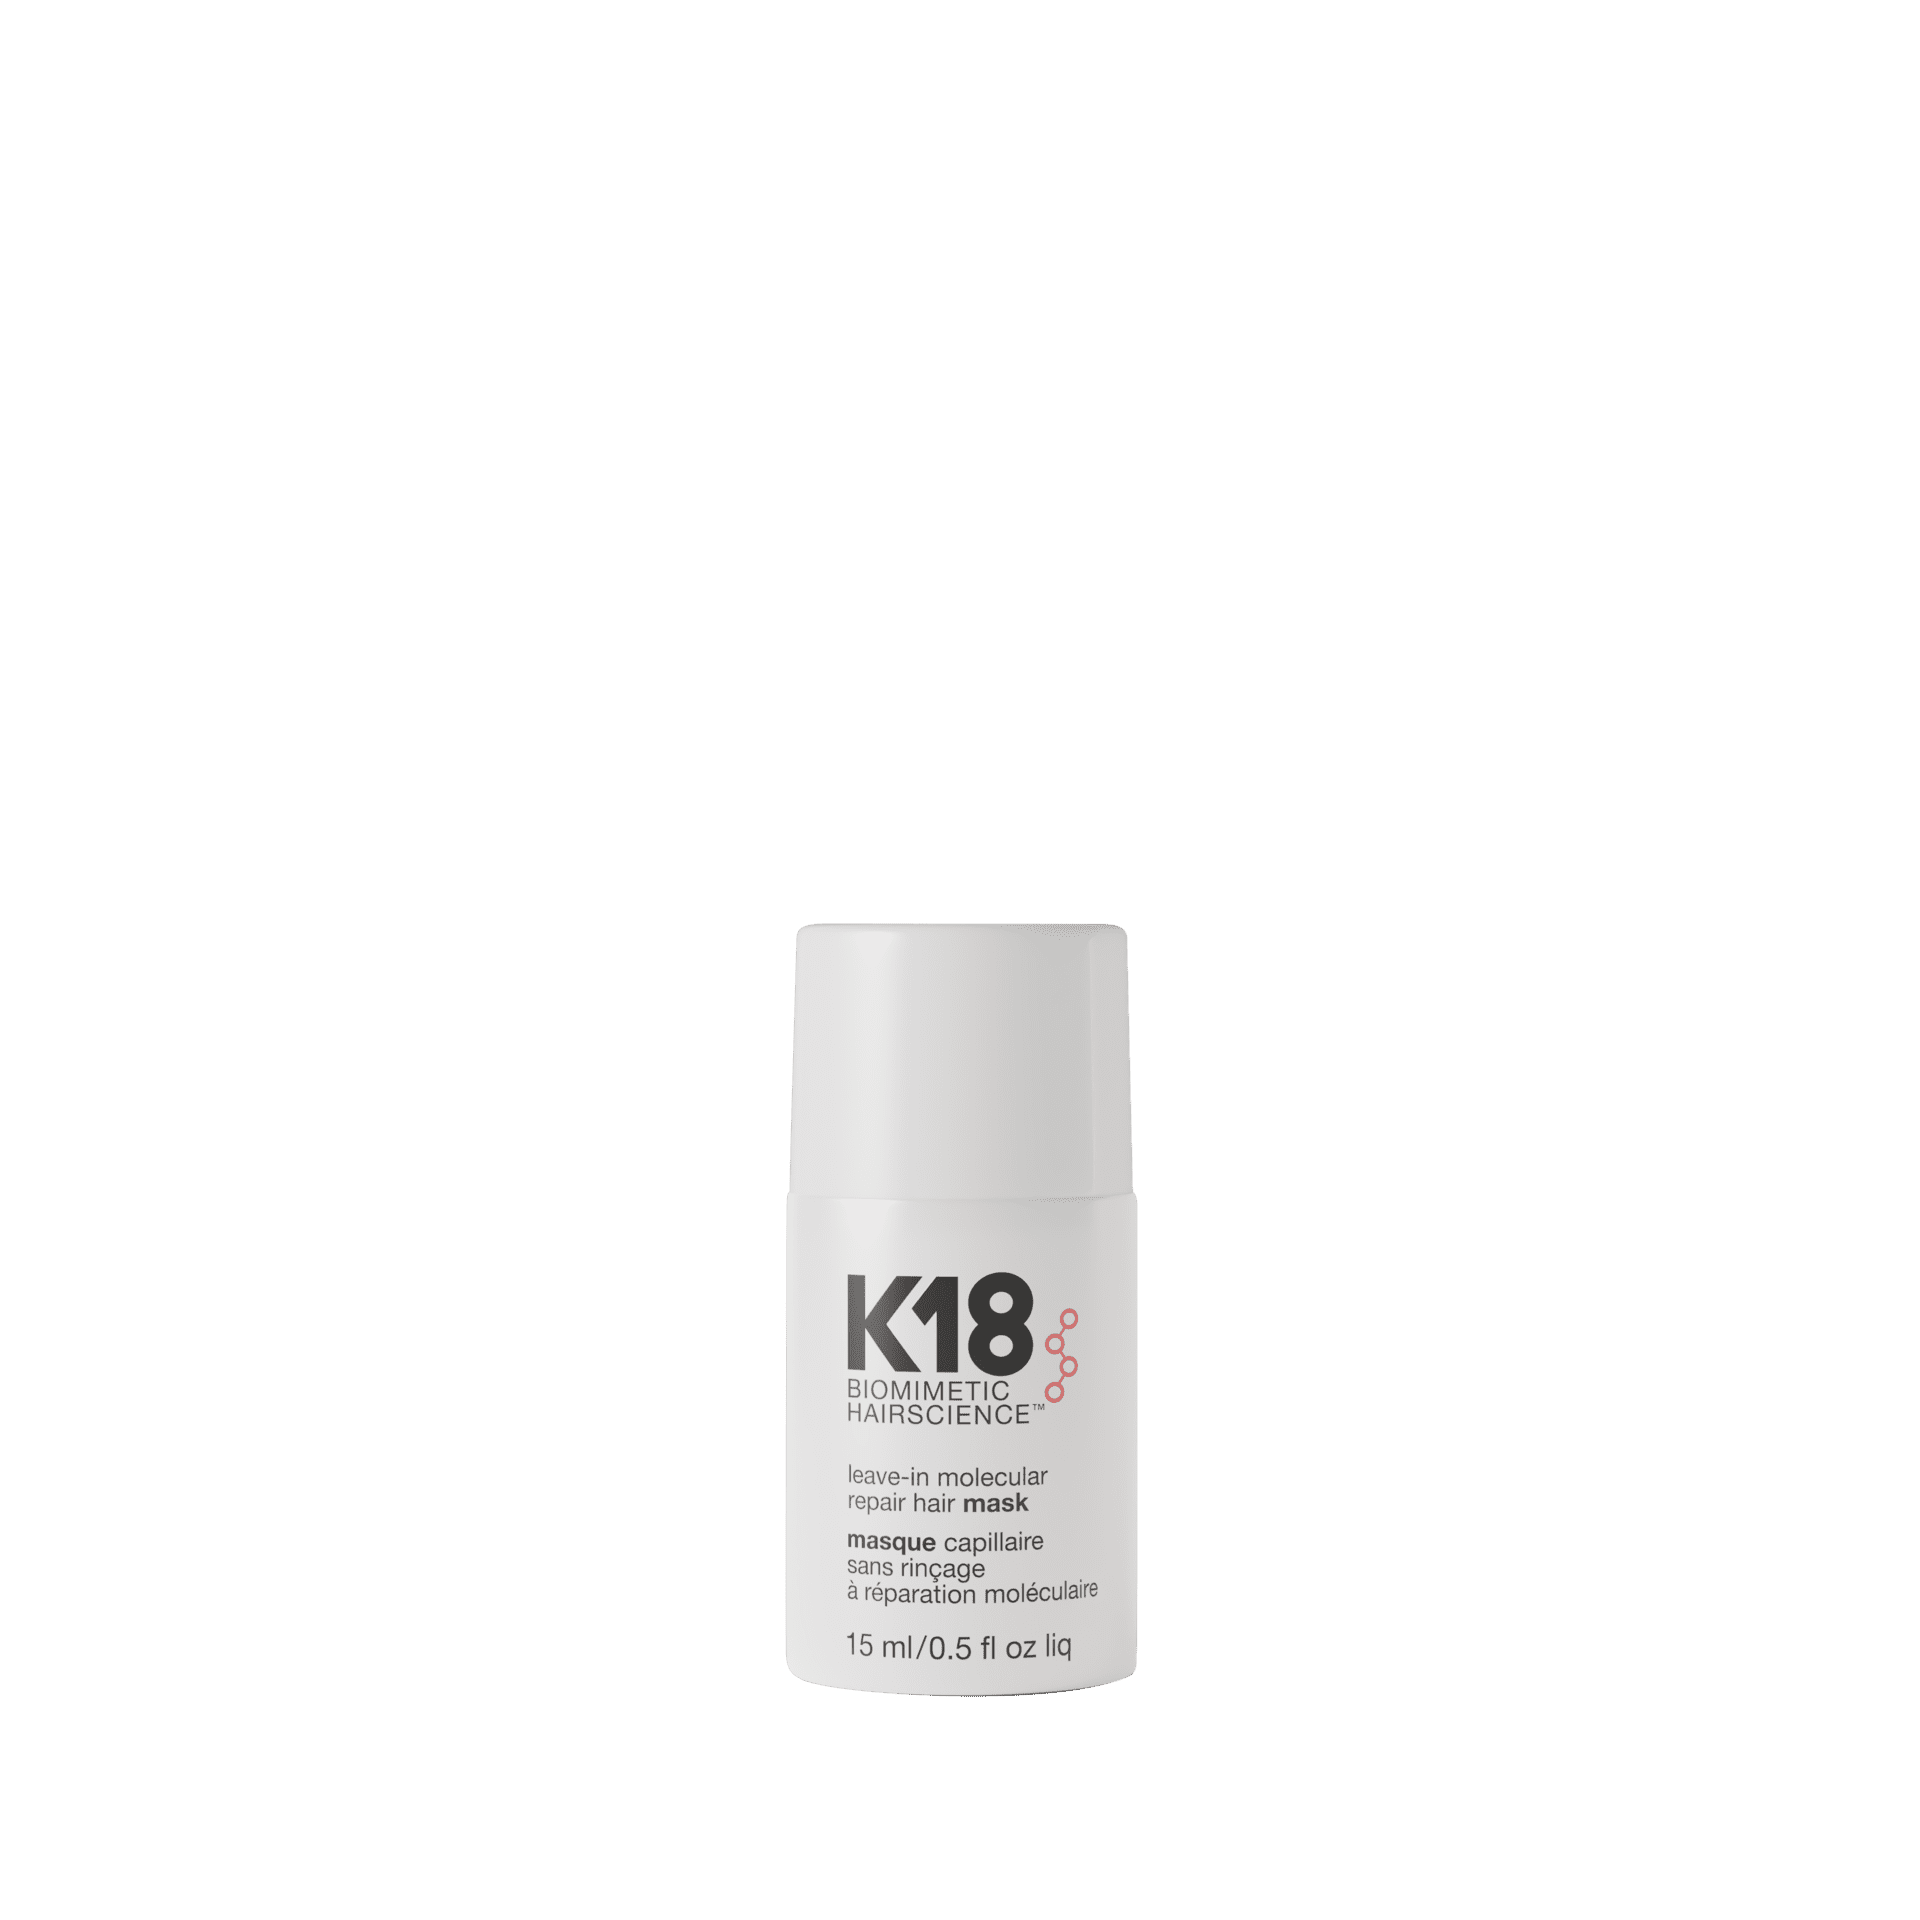 K18 Hair Leave-in Molecular Repair Mask - 15ml